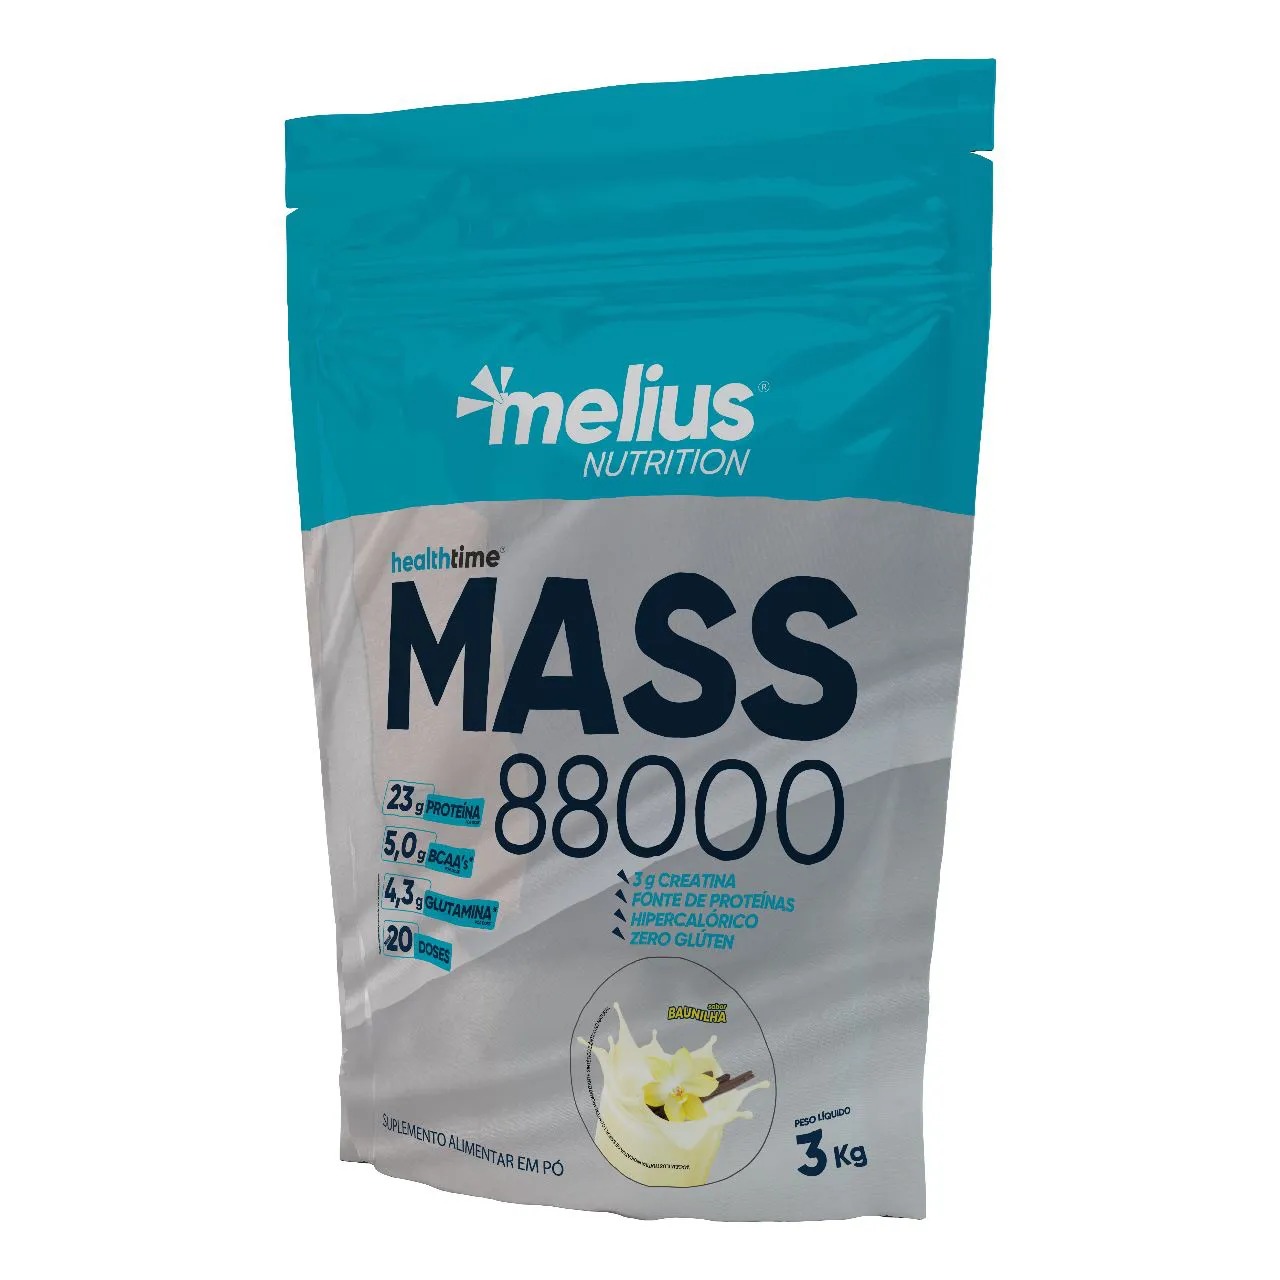 MASS 88000 HEALTH TIME - 3KG